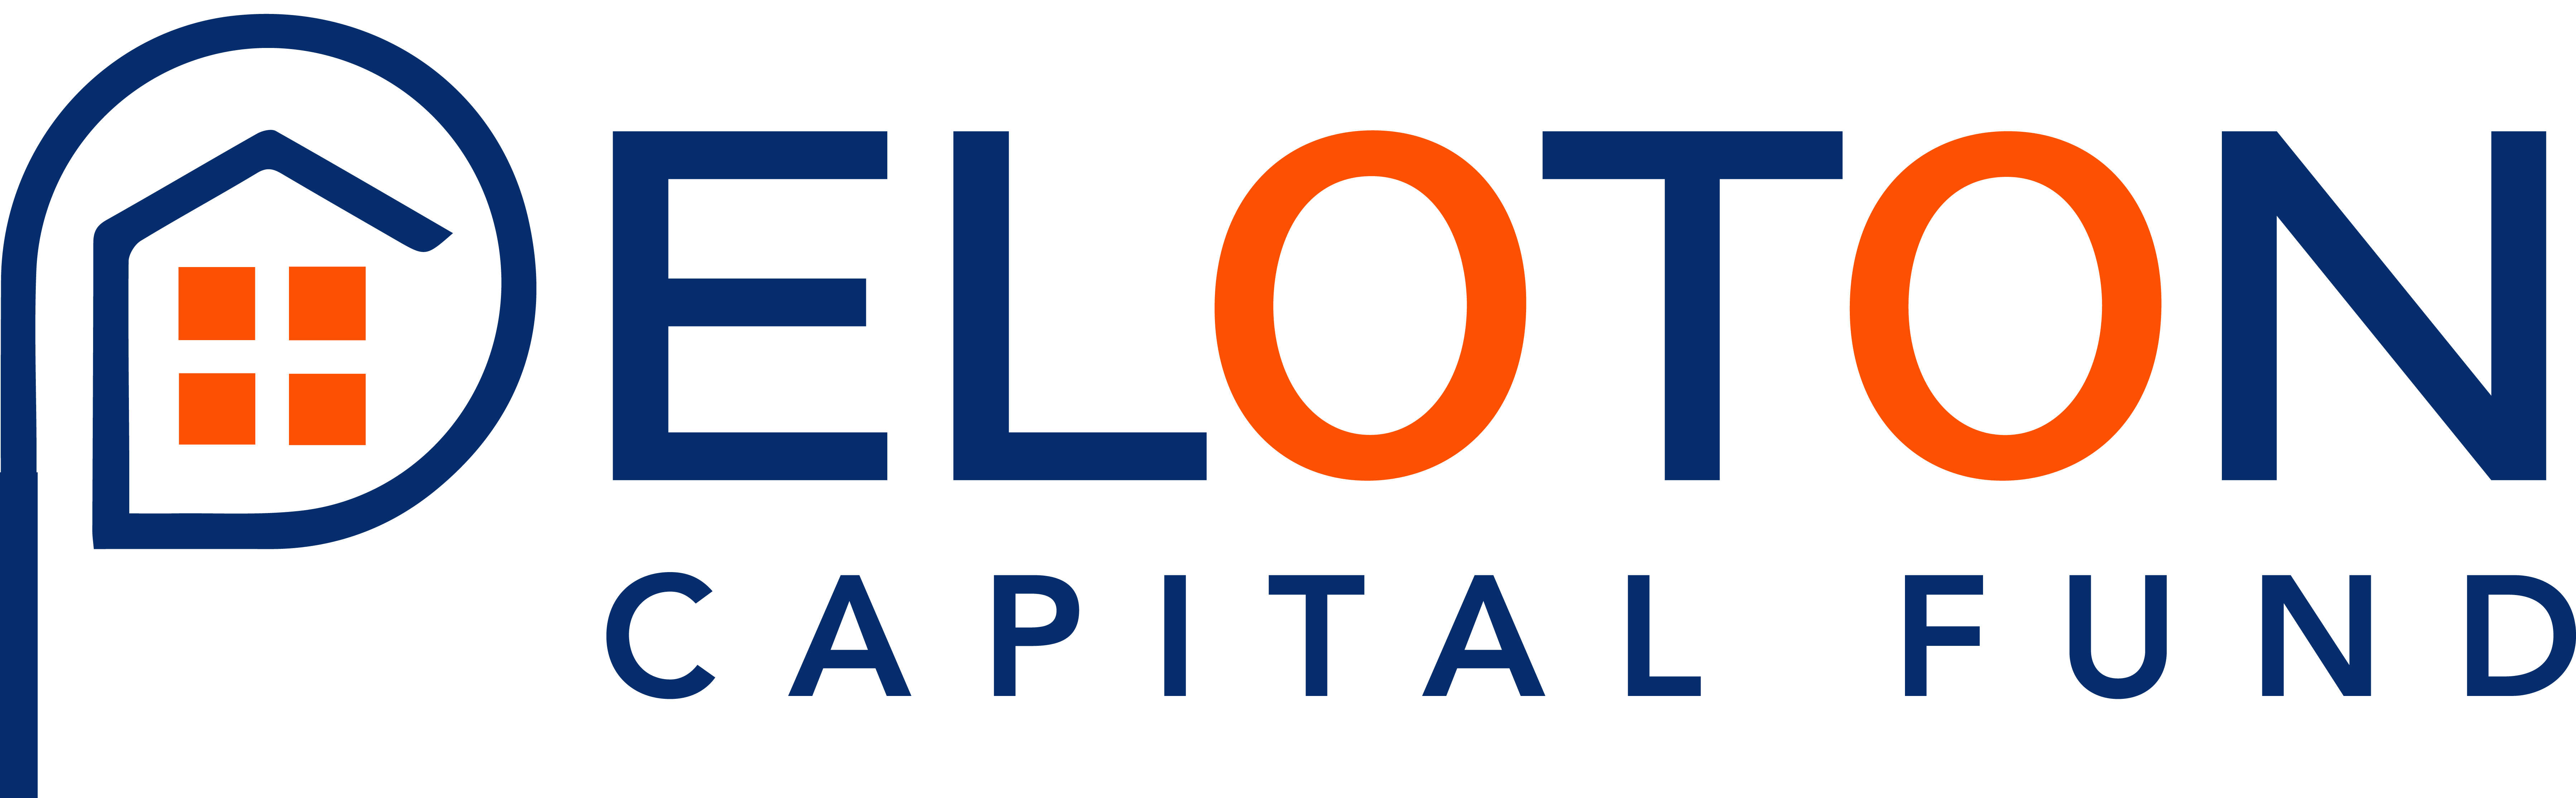 Peloton Capital Fund Logo